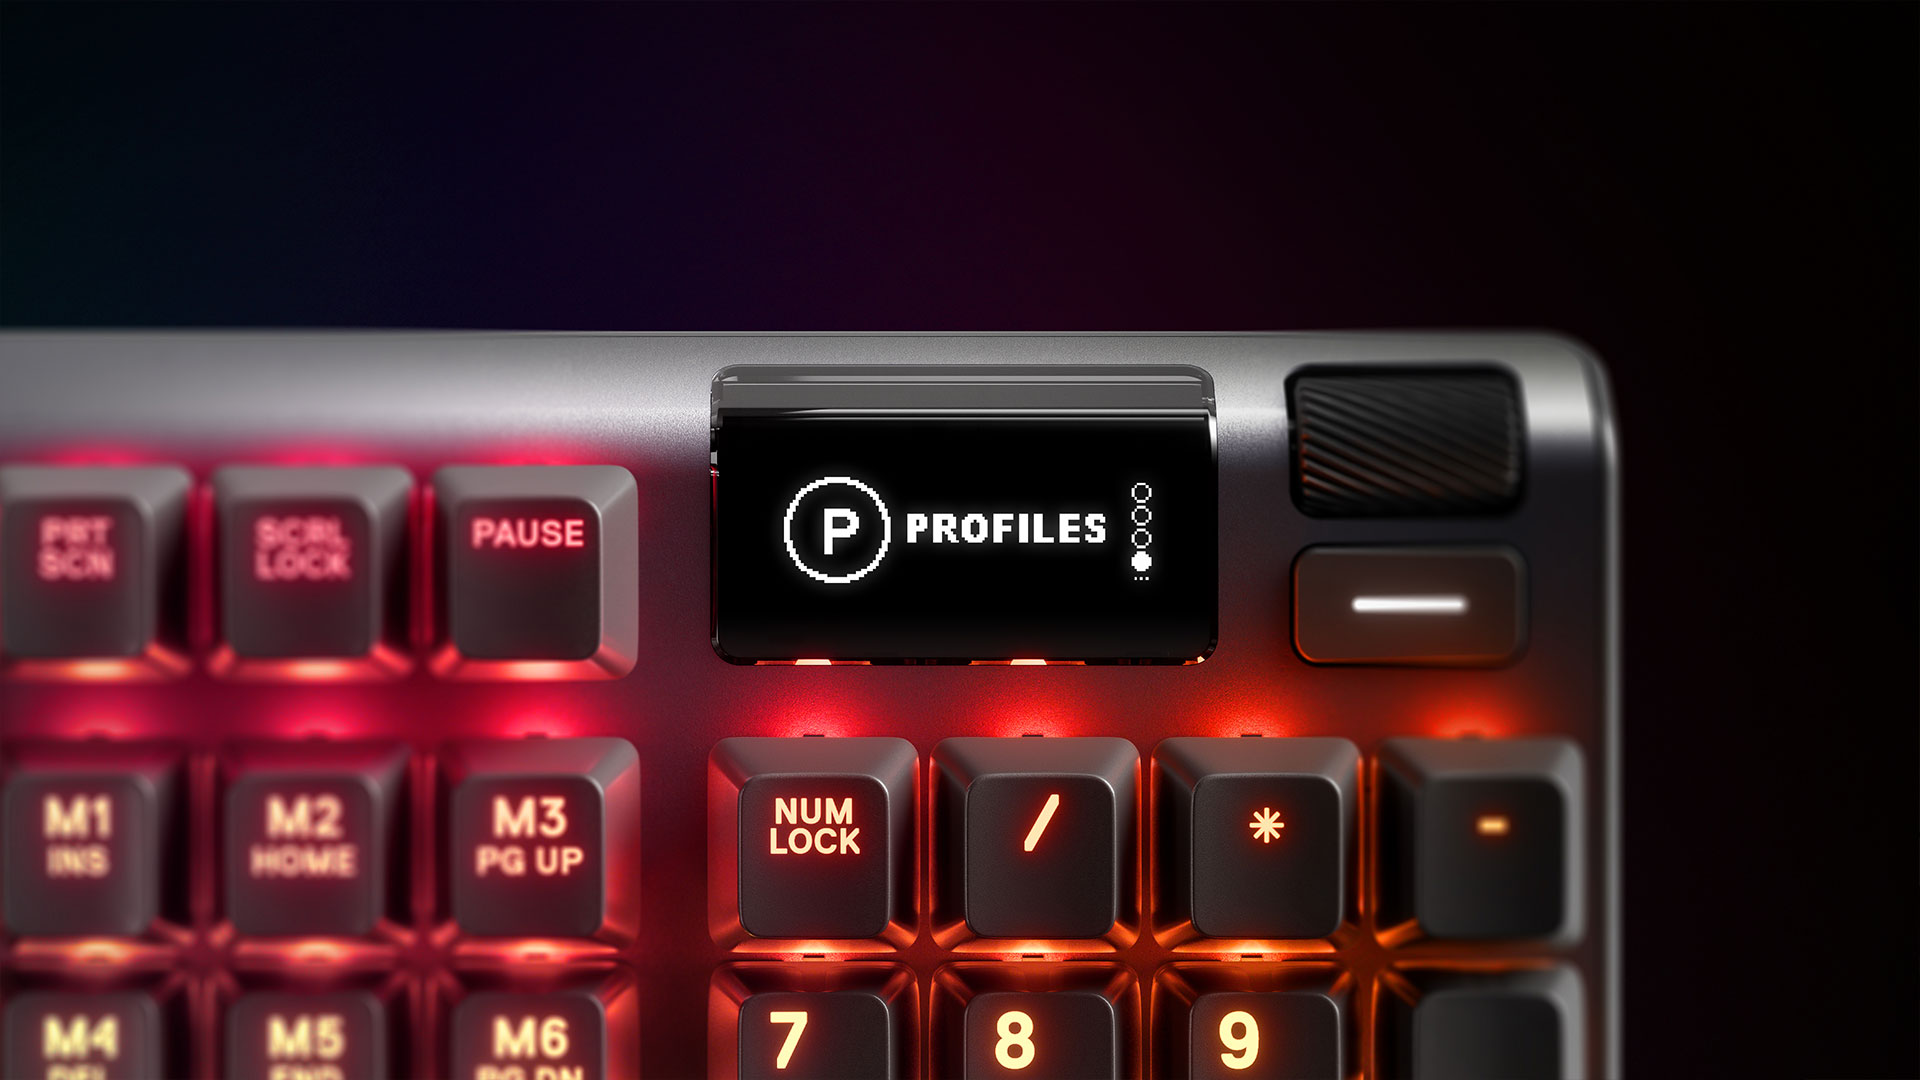 apex pro keyboard